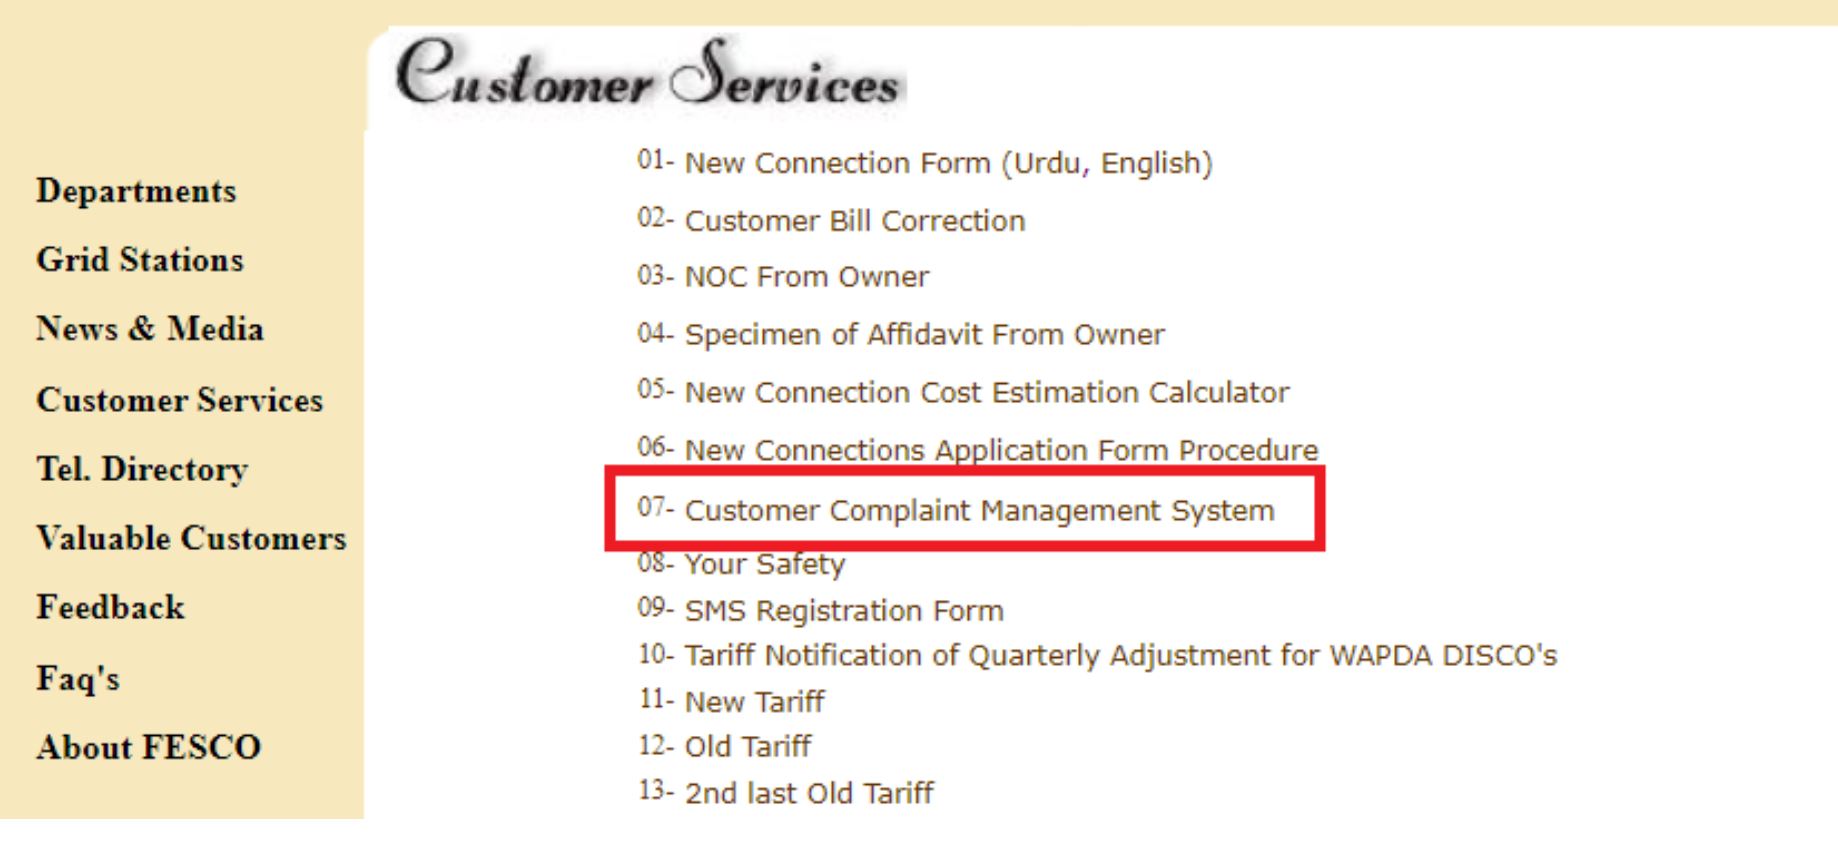  Customer Complaint Management System